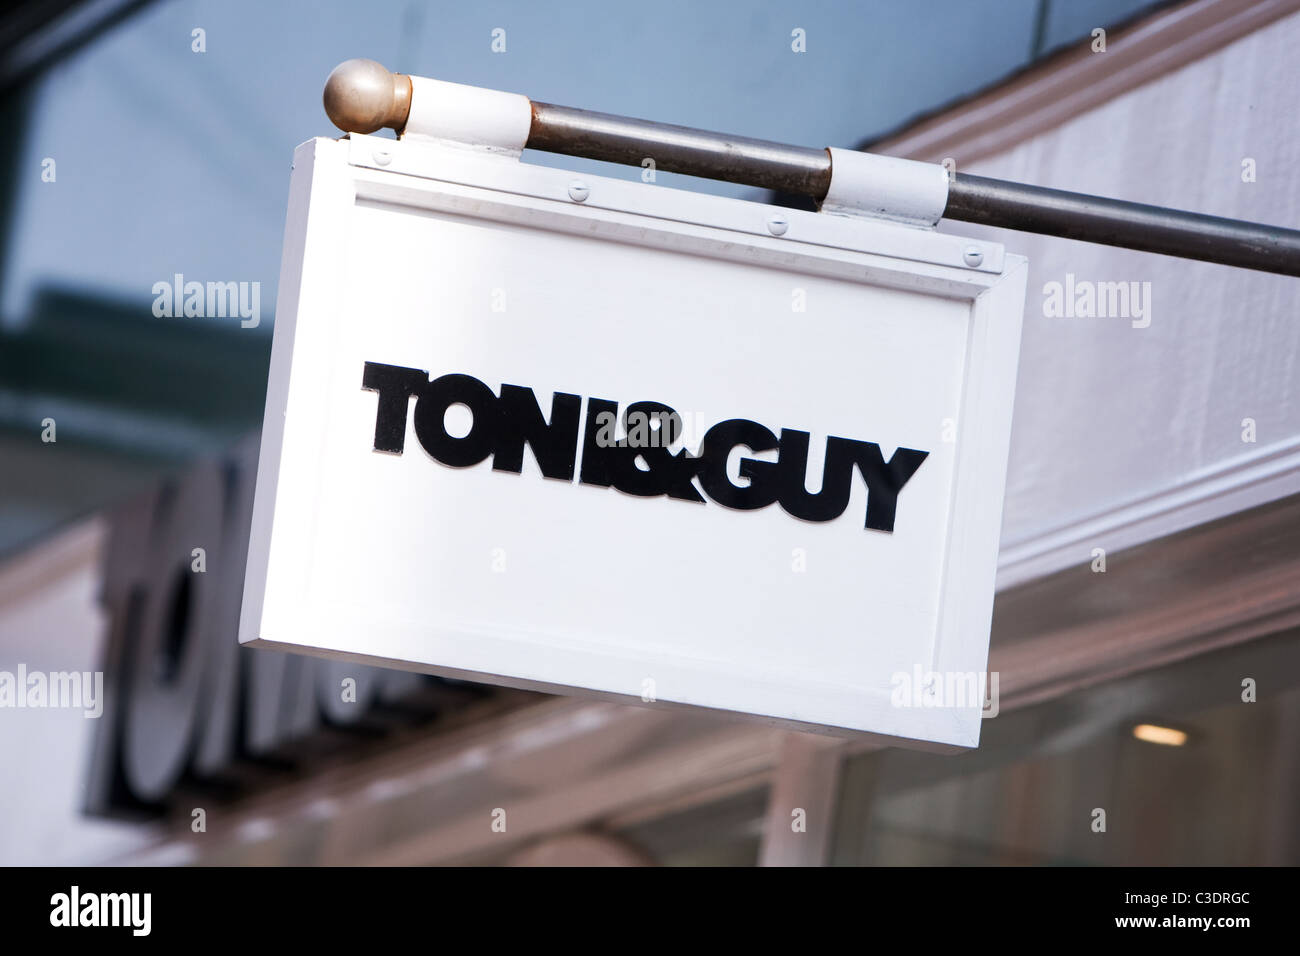 Toni&Guy High Street Salon logo sign Stock Photo